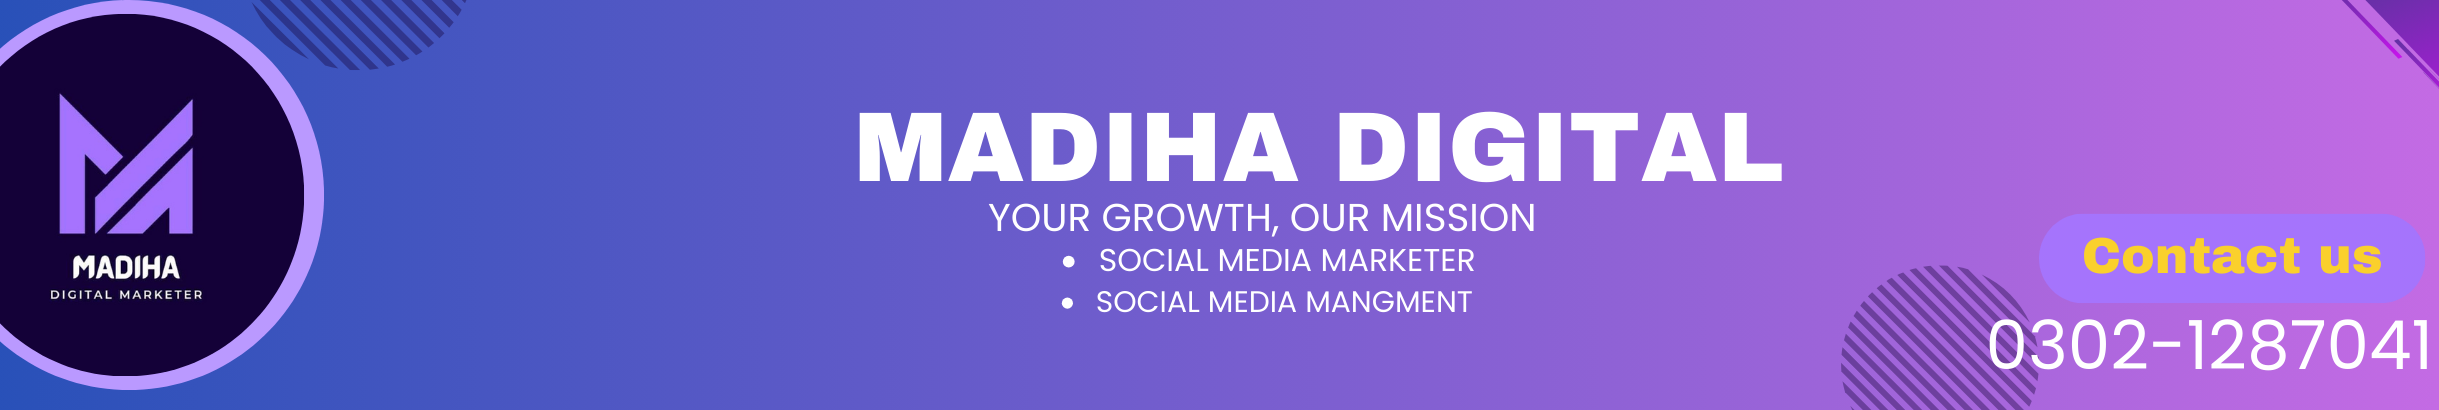 Madiha Digital's profile banner